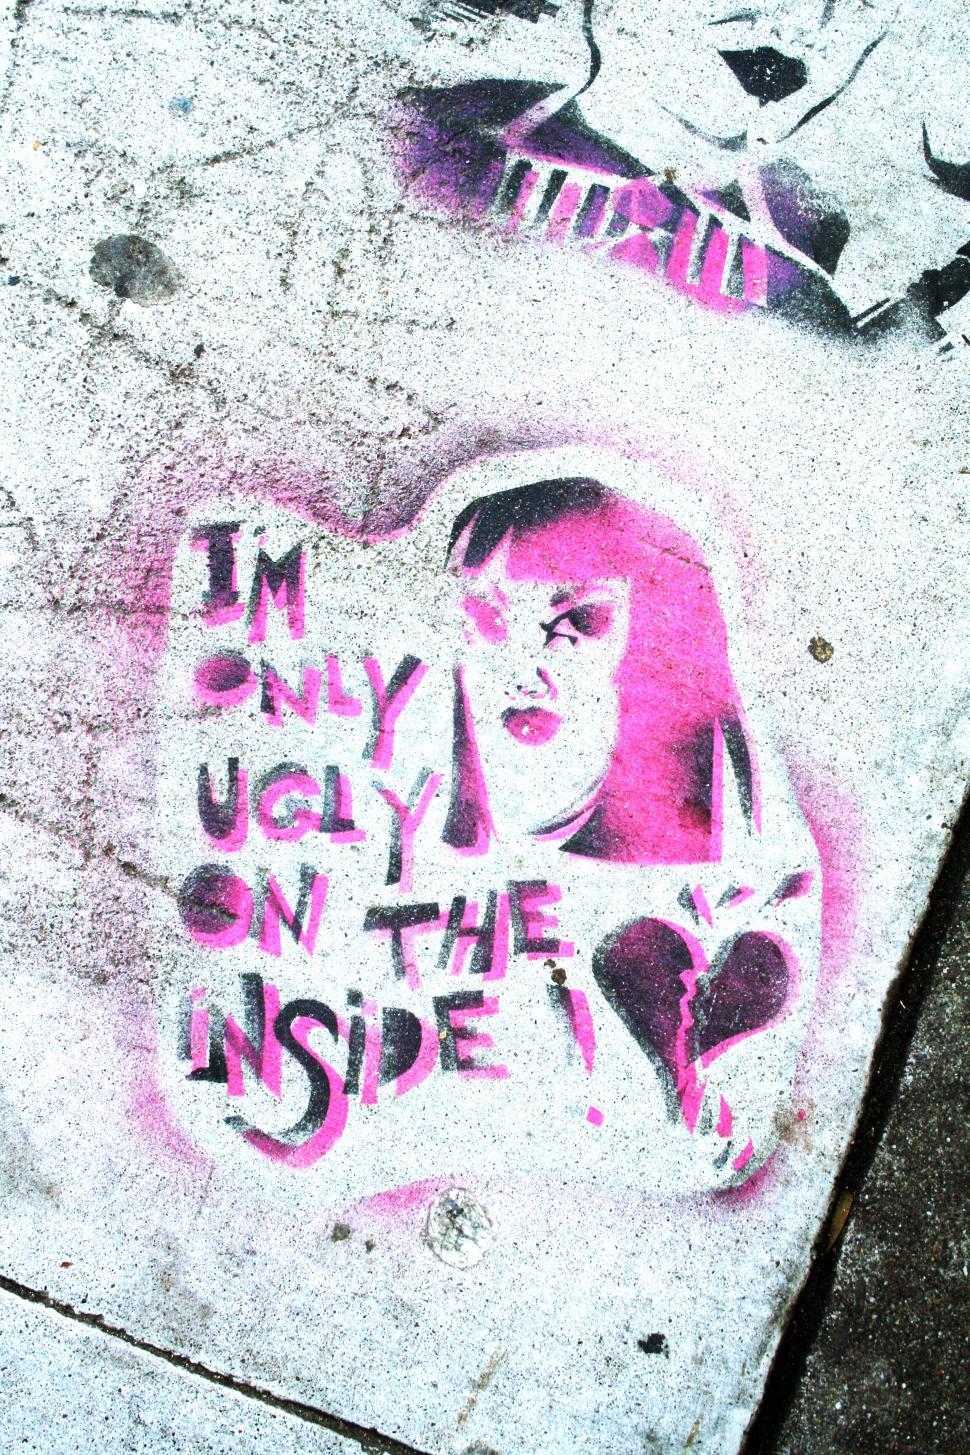 Free Image of Urban graffiti art with censored message 